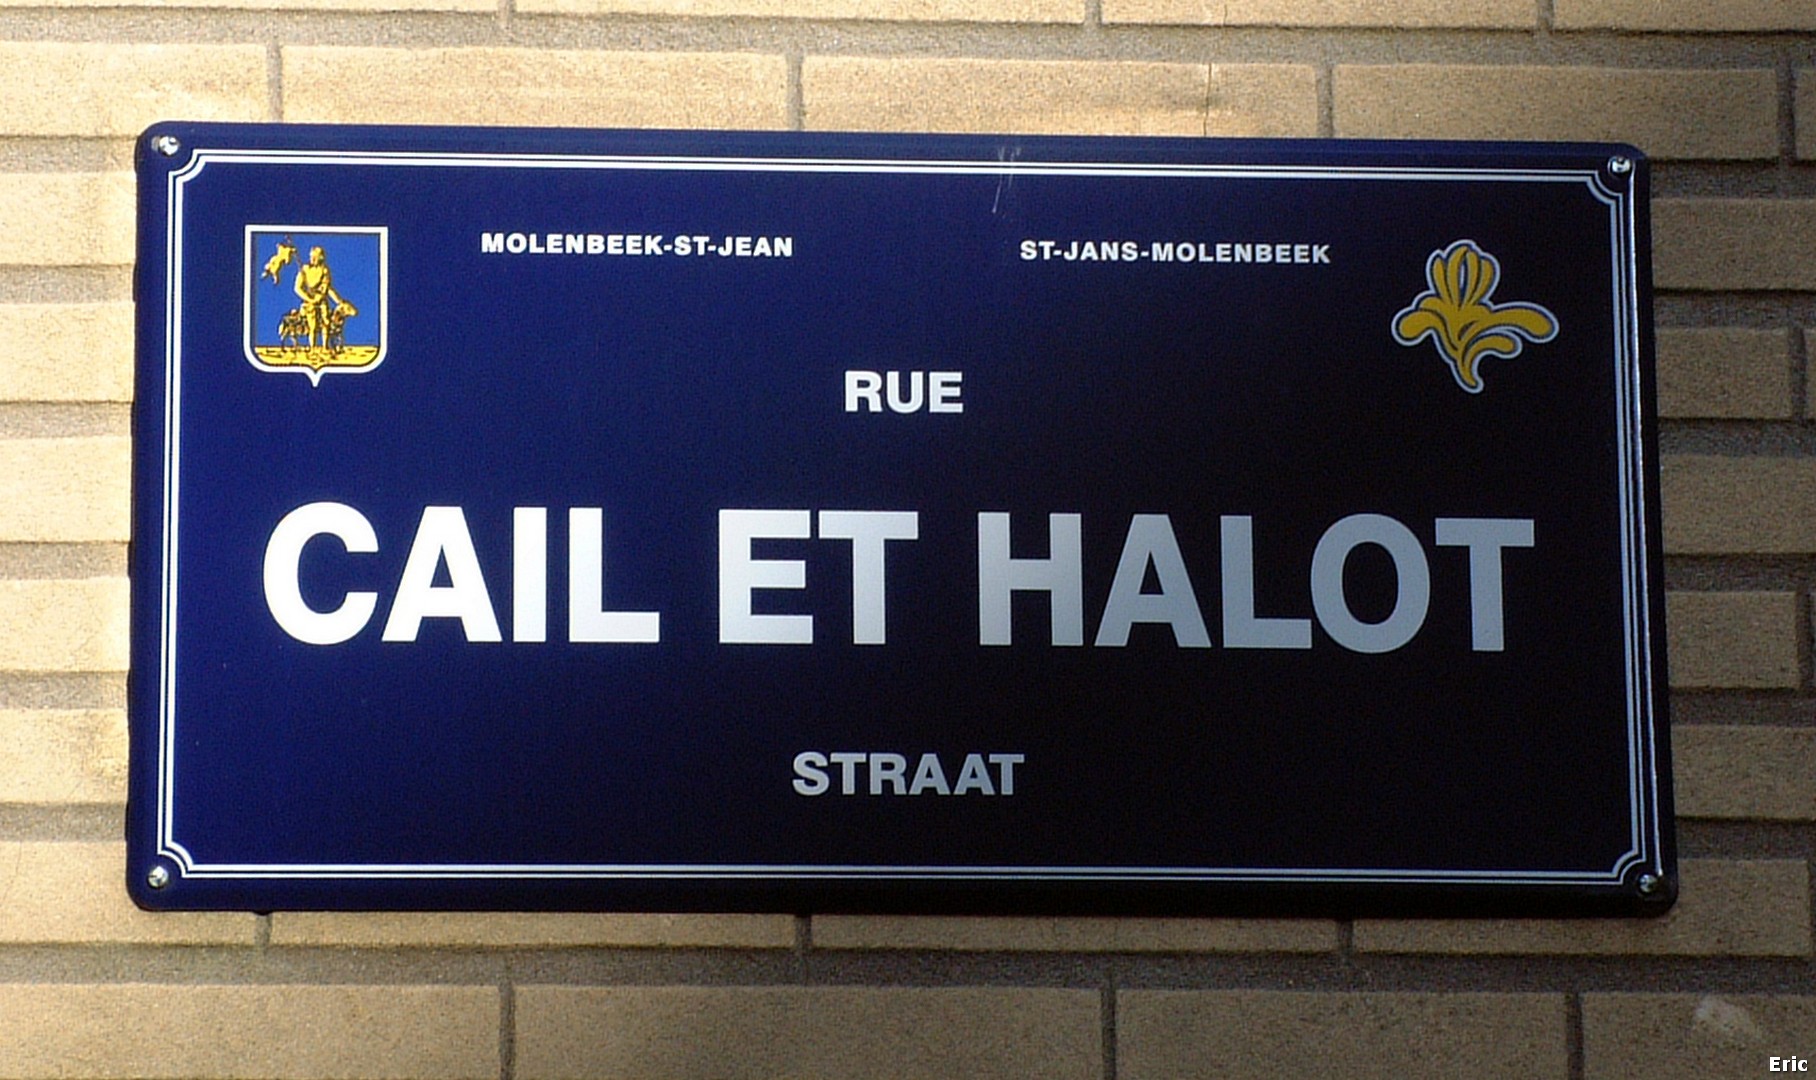 Rue Cail et Halot